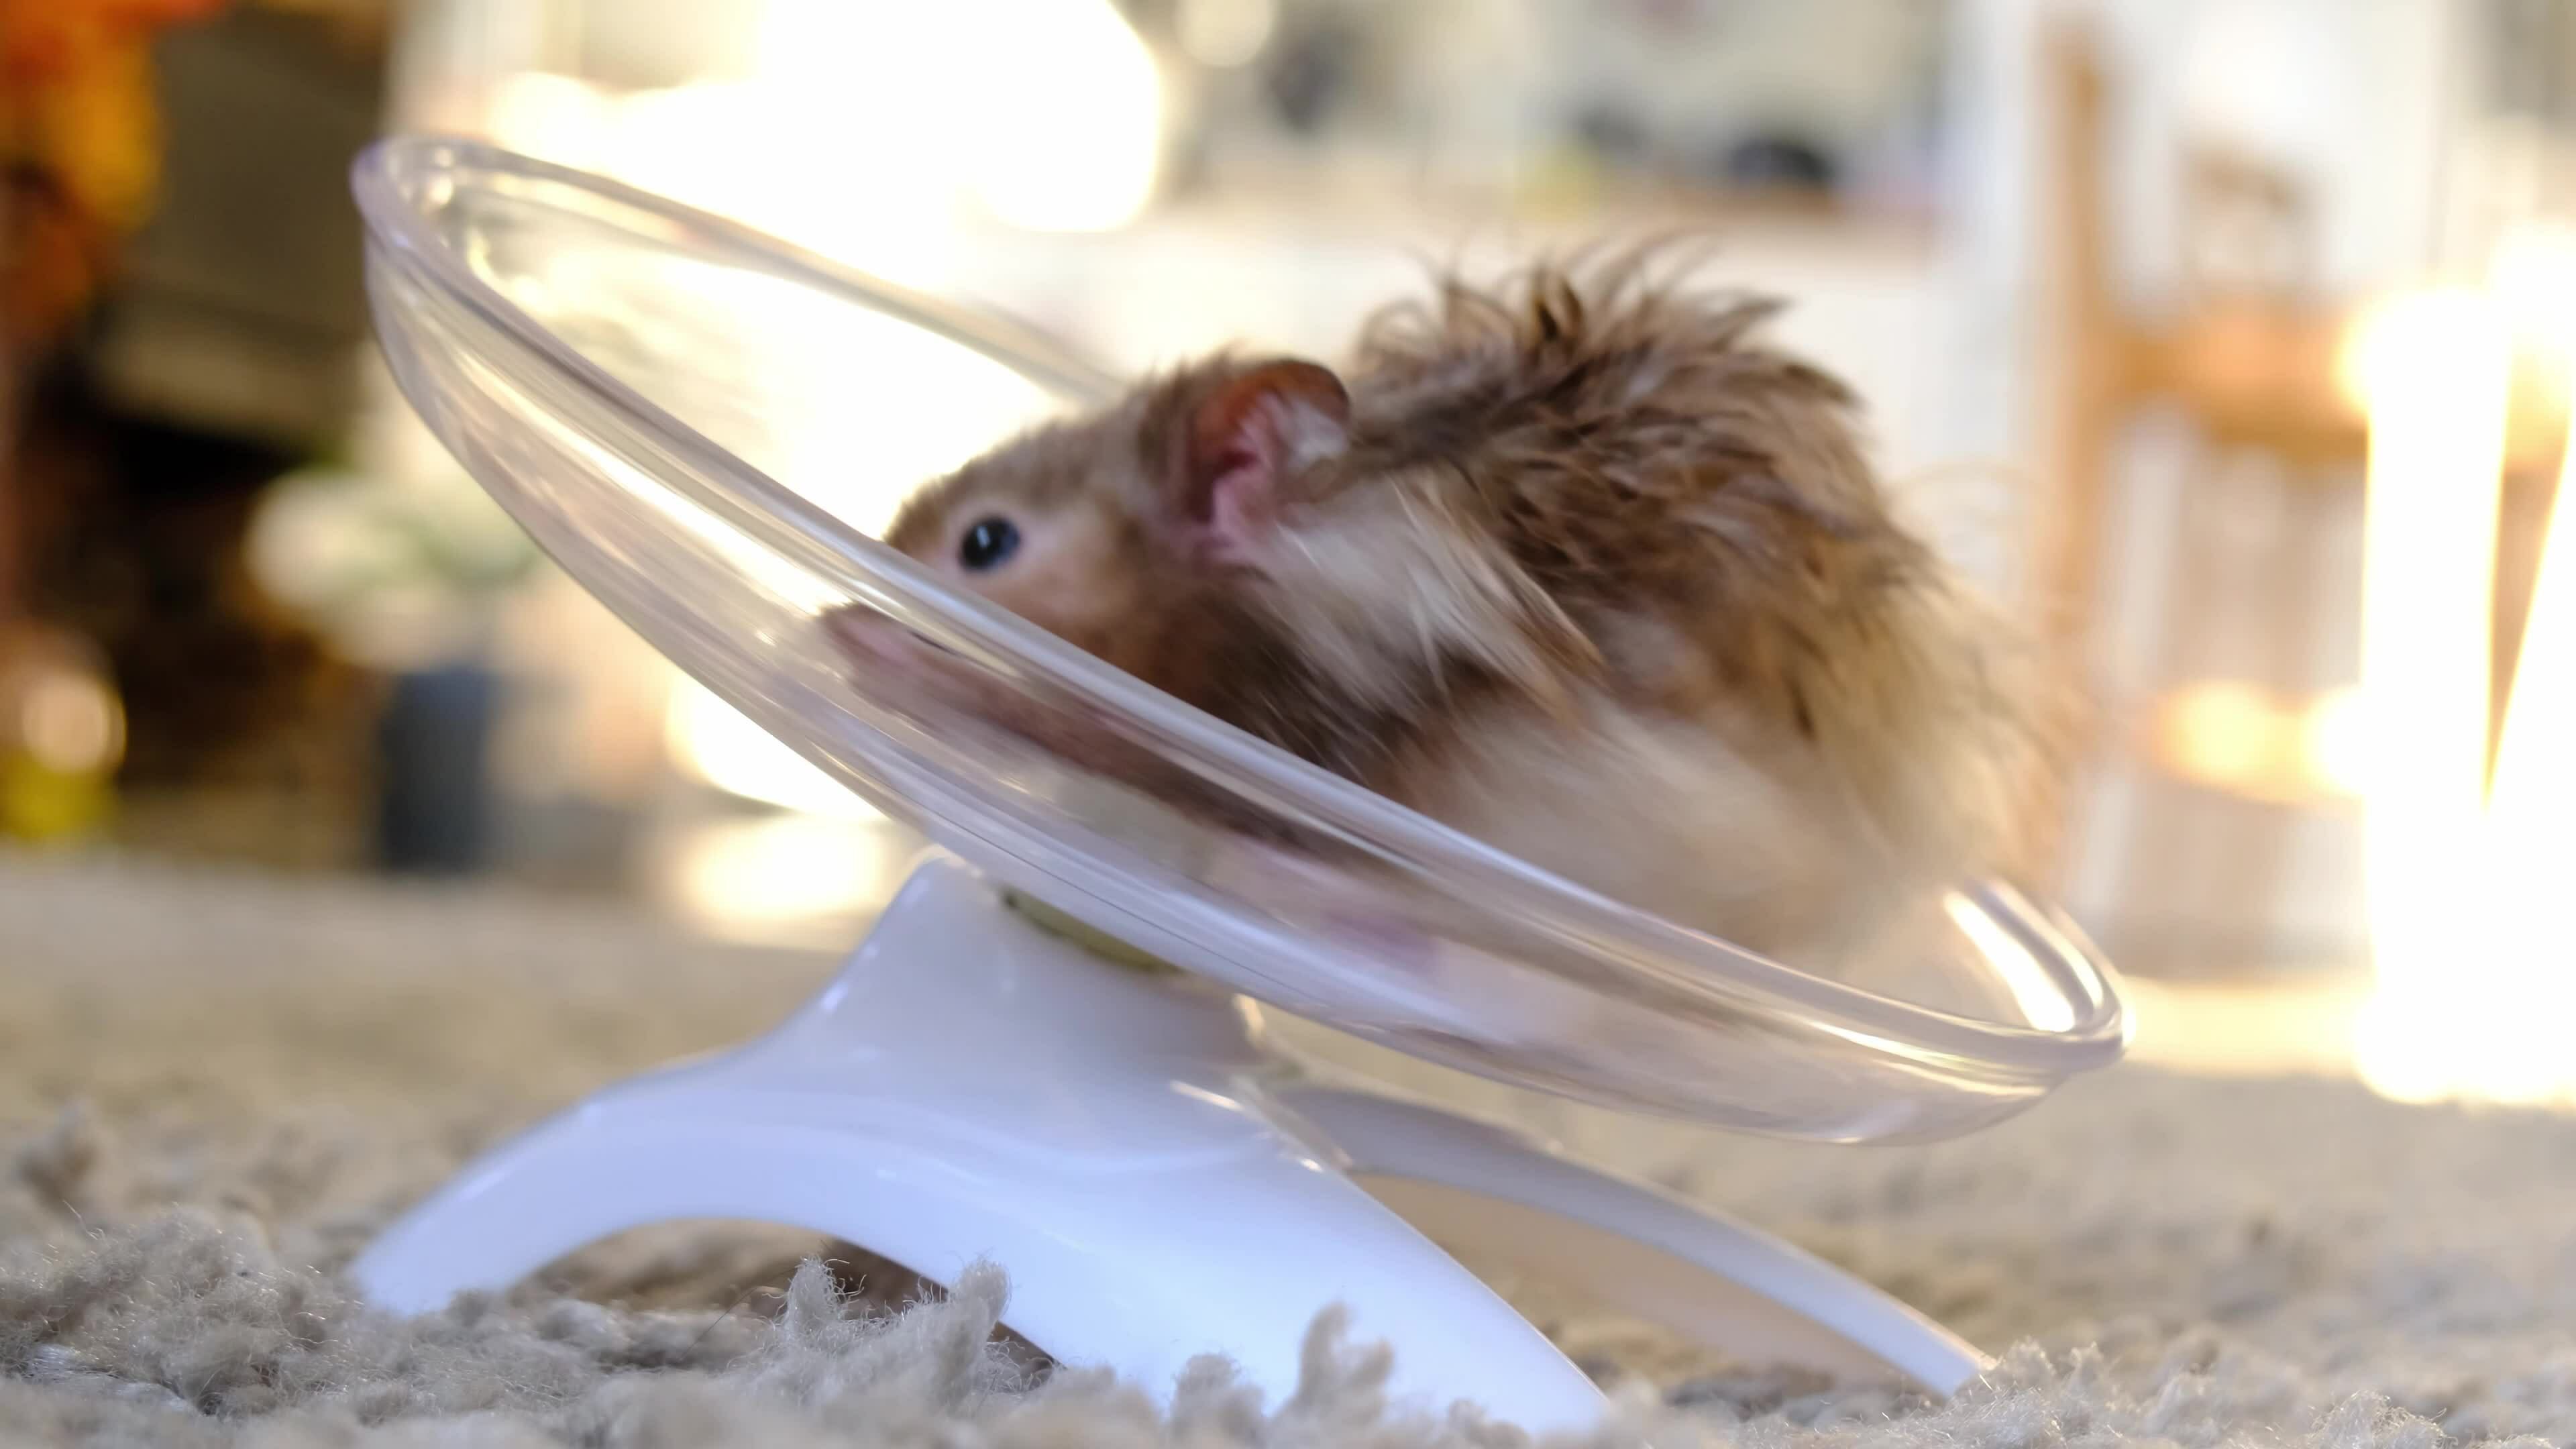 Funny fluffy Syrian hamster running around in a spinning wheel